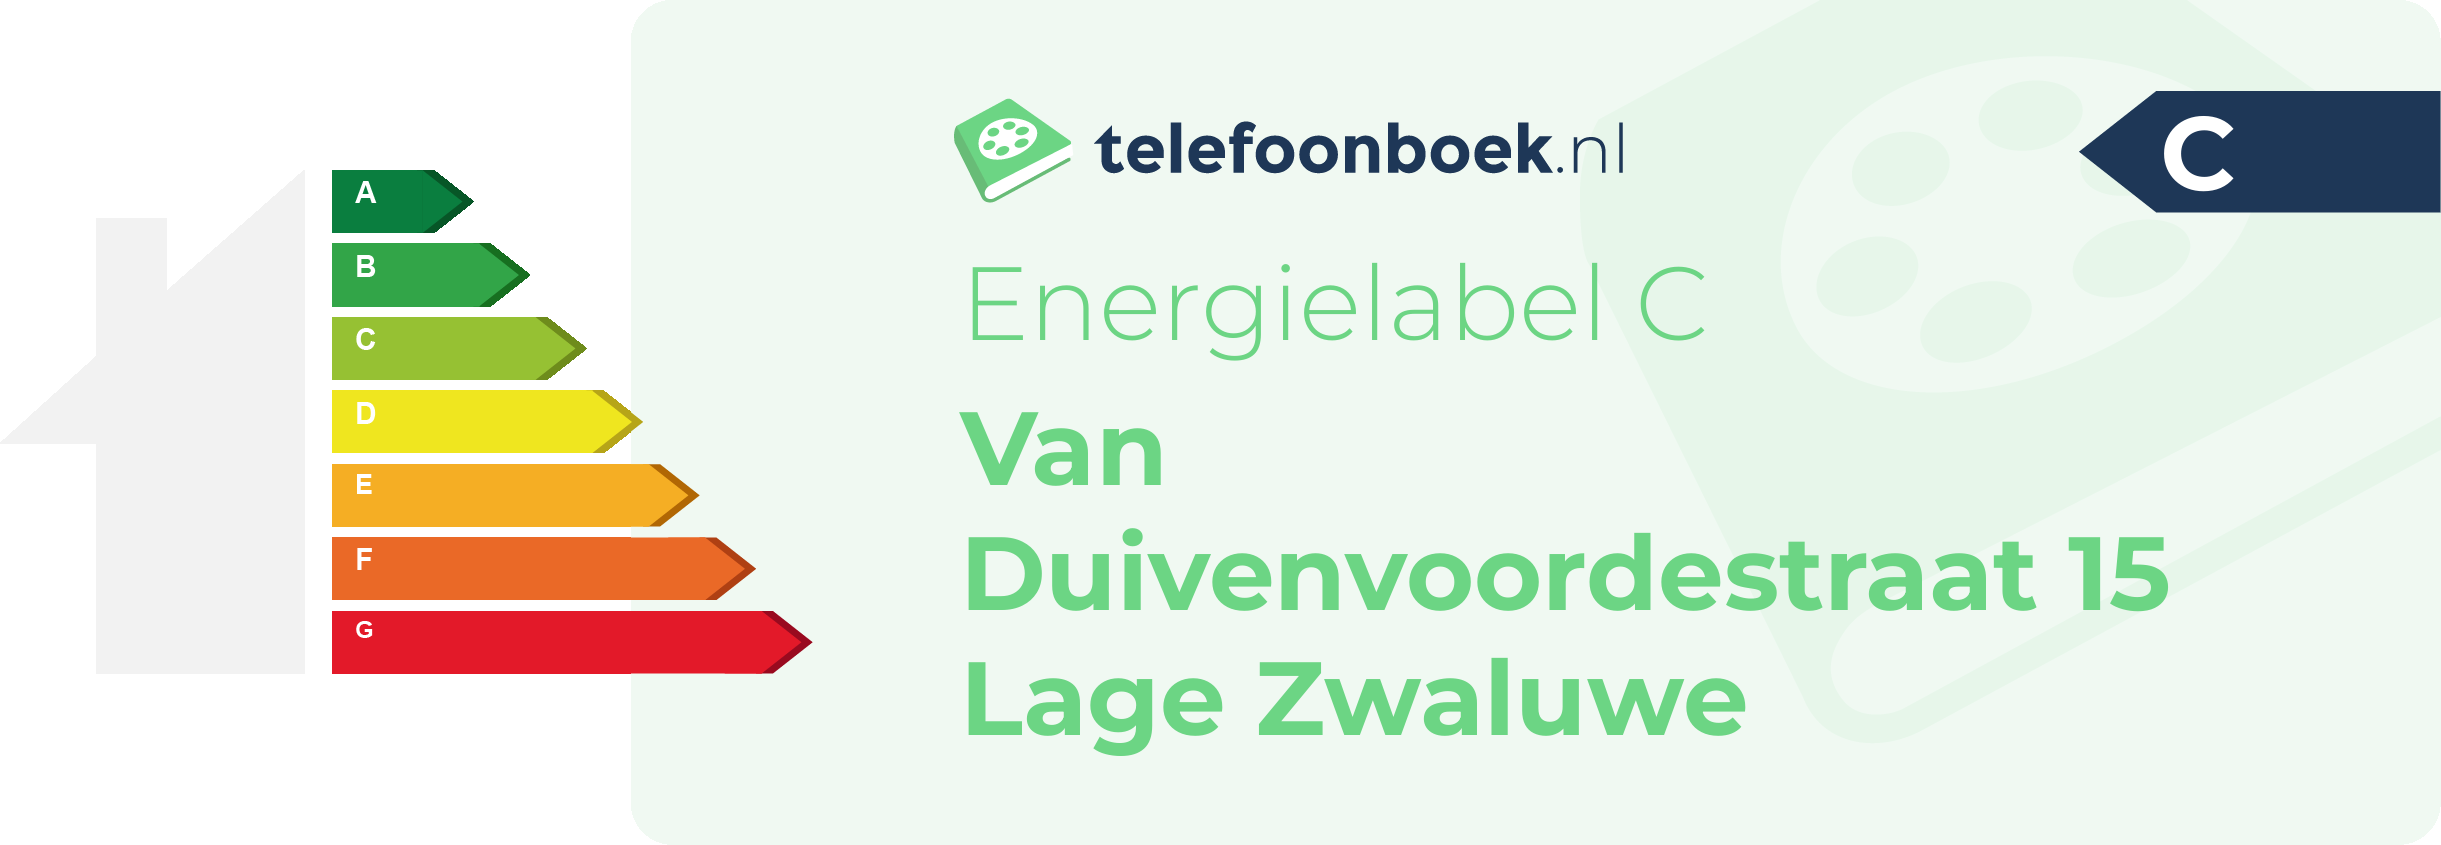 Energielabel Van Duivenvoordestraat 15 Lage Zwaluwe